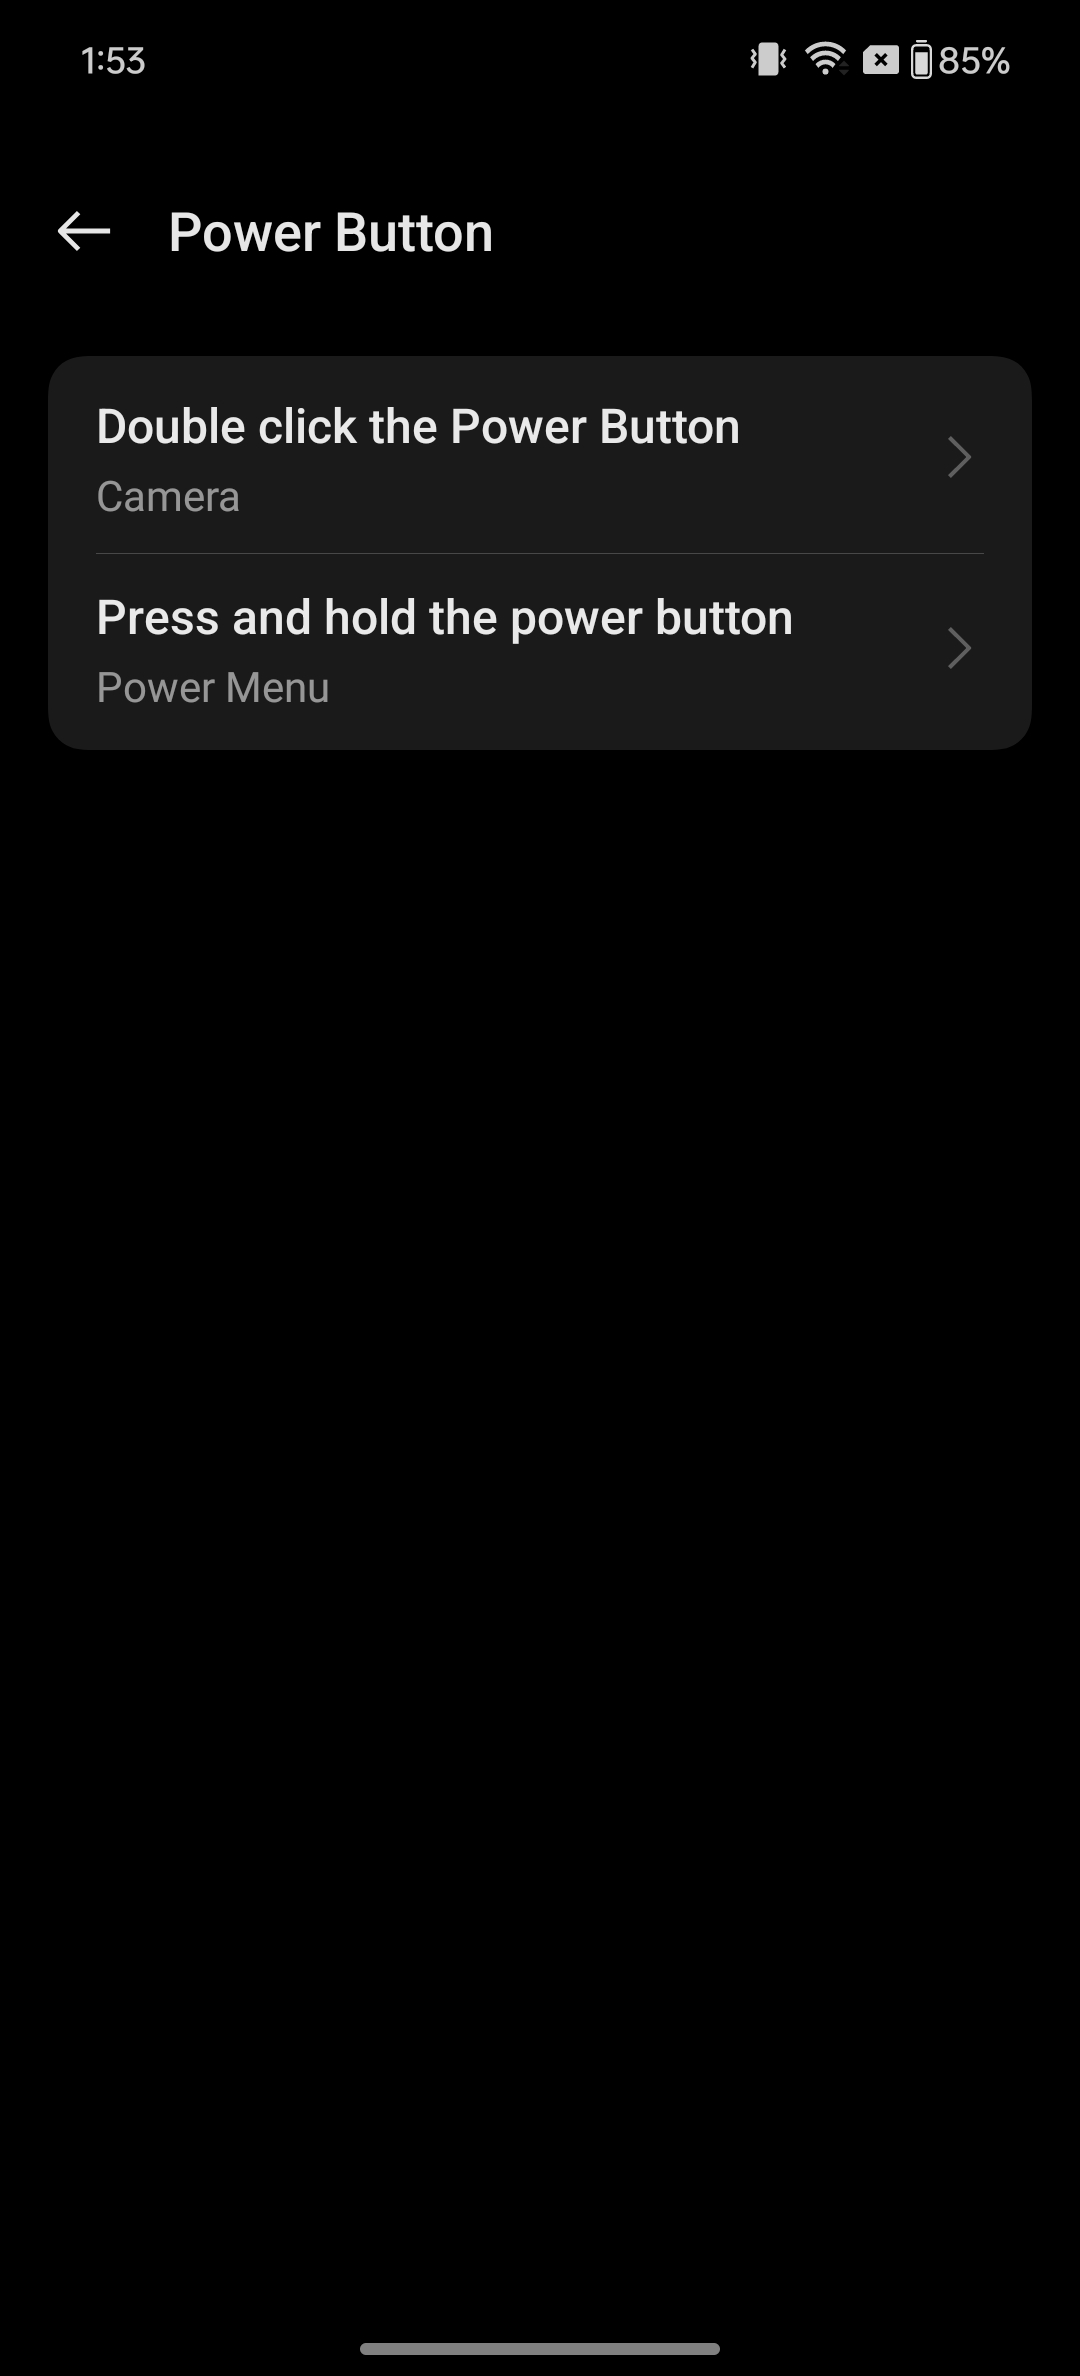 Oxygen OS Power Button Options